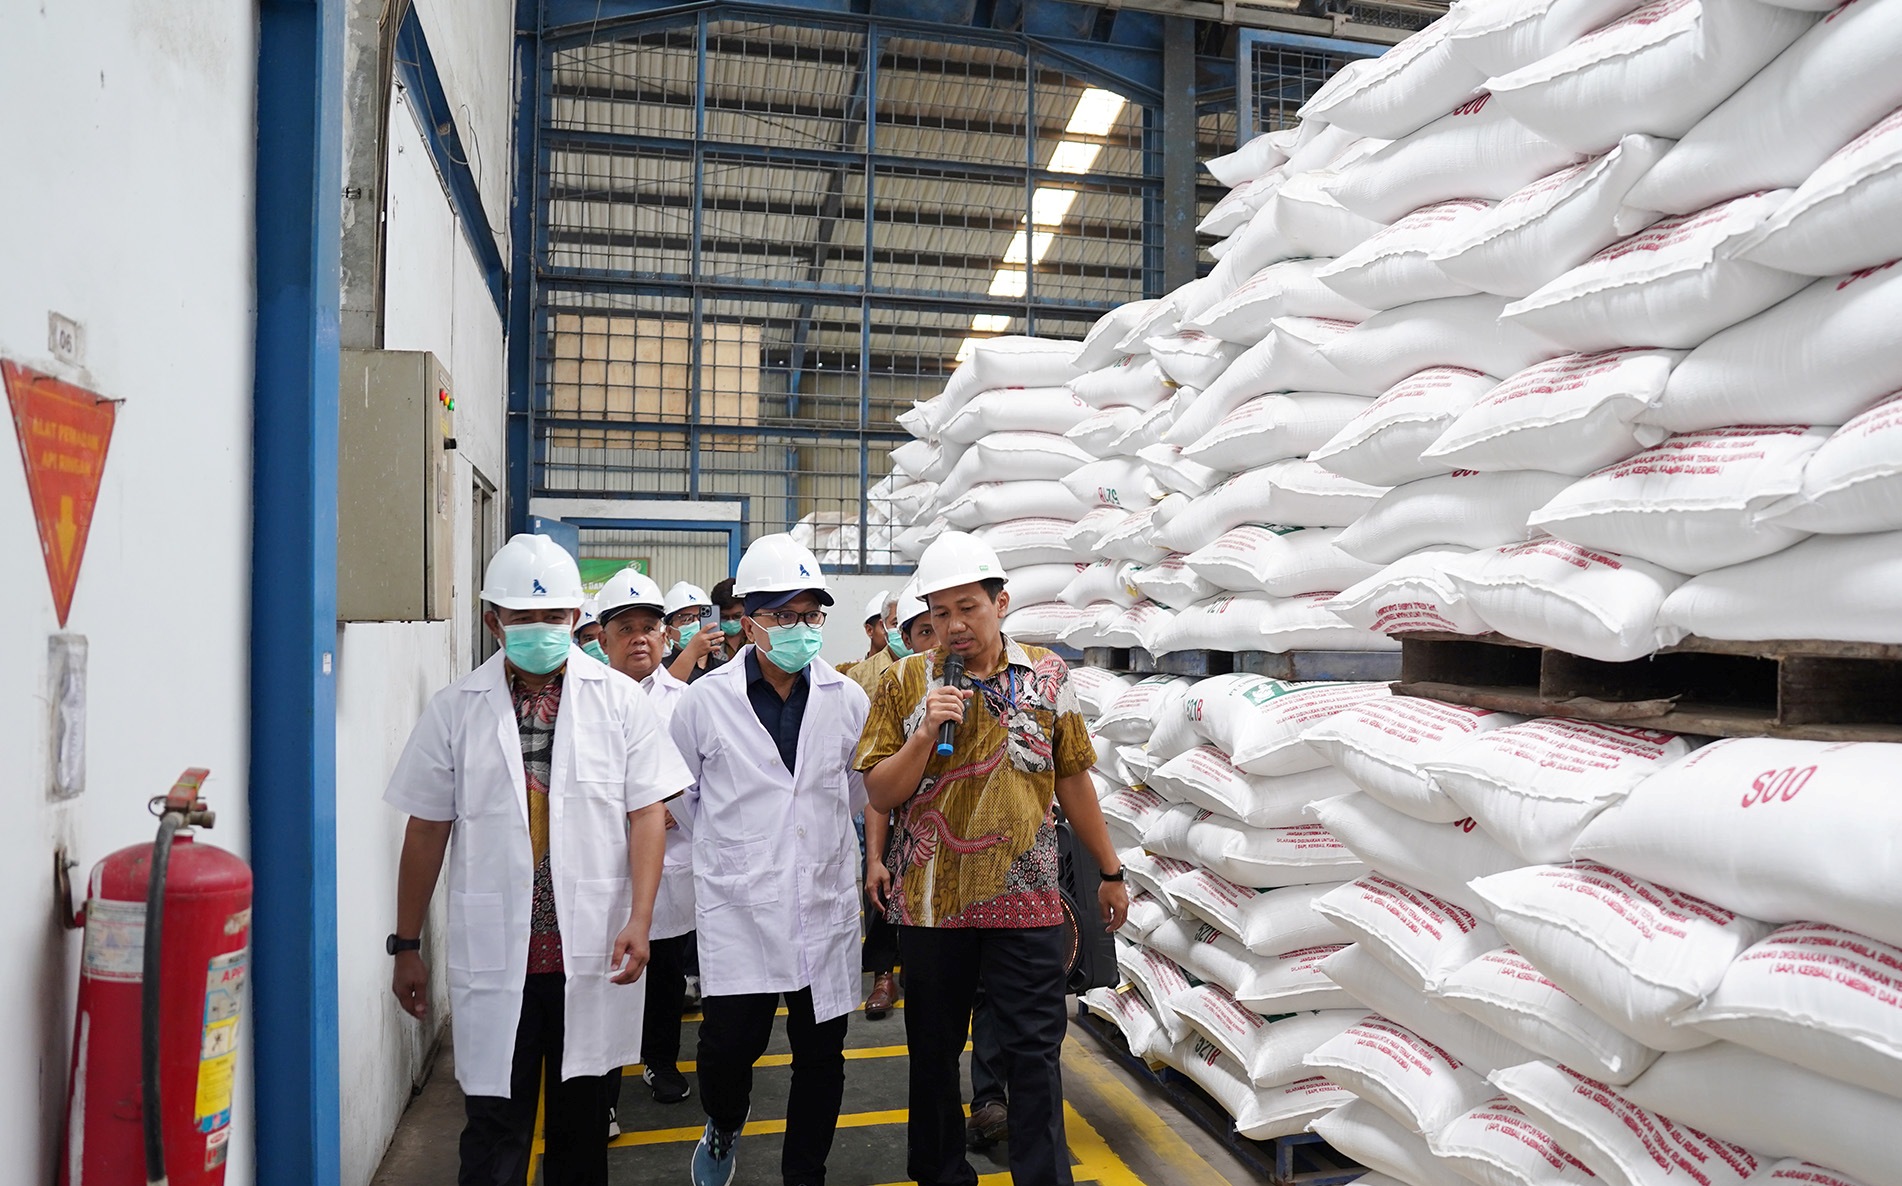 Menteri Perdagangan Tinjau Pasokan Pakan di Pabrik PT Charoen Pokphand Feedmill Lampung, Ini Hasilnya!